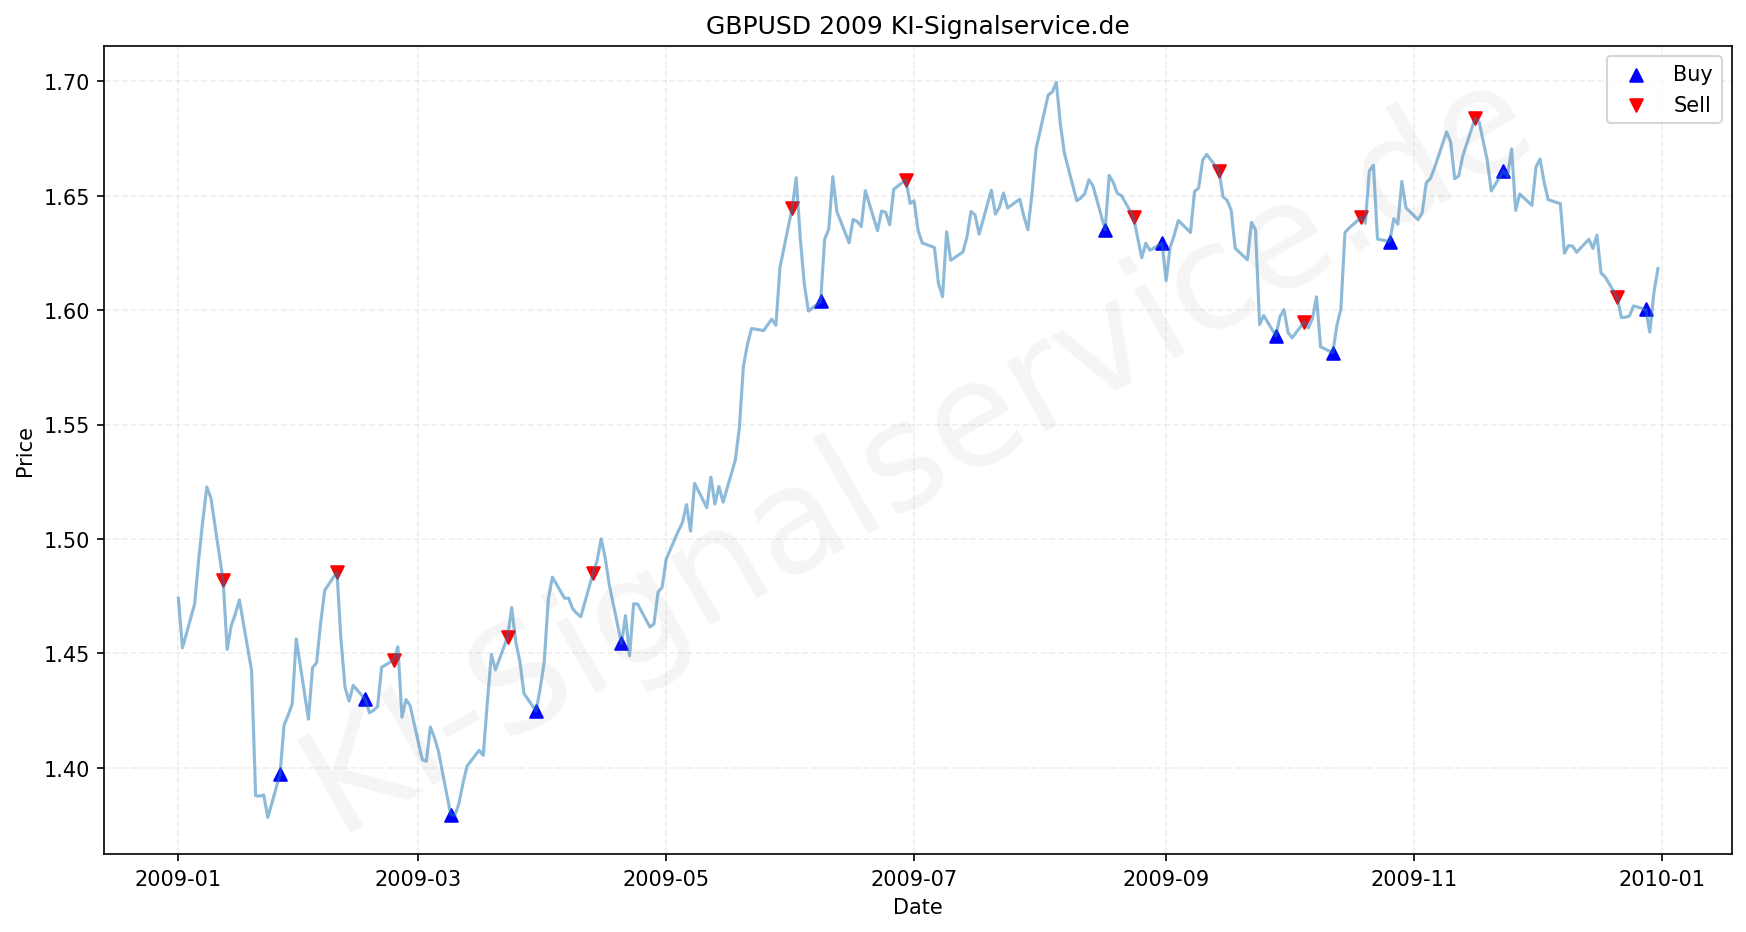 GBPUSD Chart - KI Tradingsignale 2009